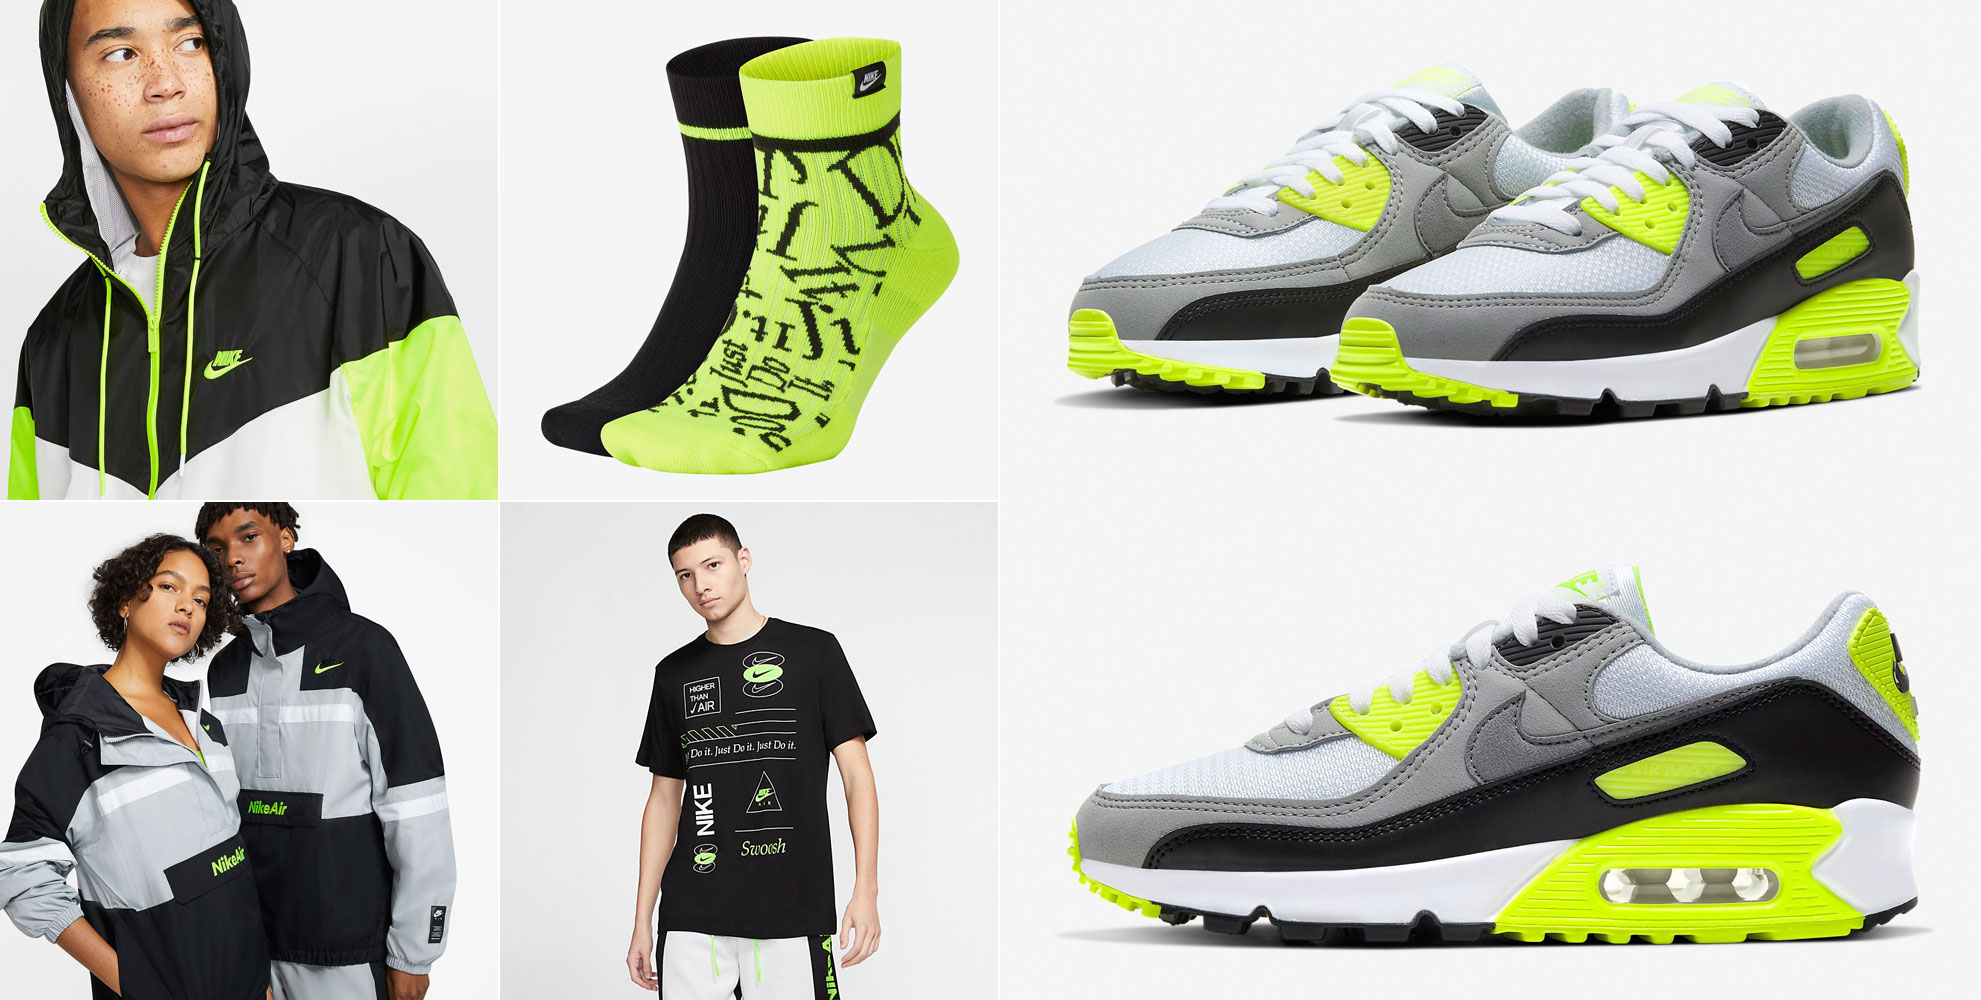 Nike Air Max 90 OG Volt Clothing to Match | SneakerFits.com قياس الاكسجين